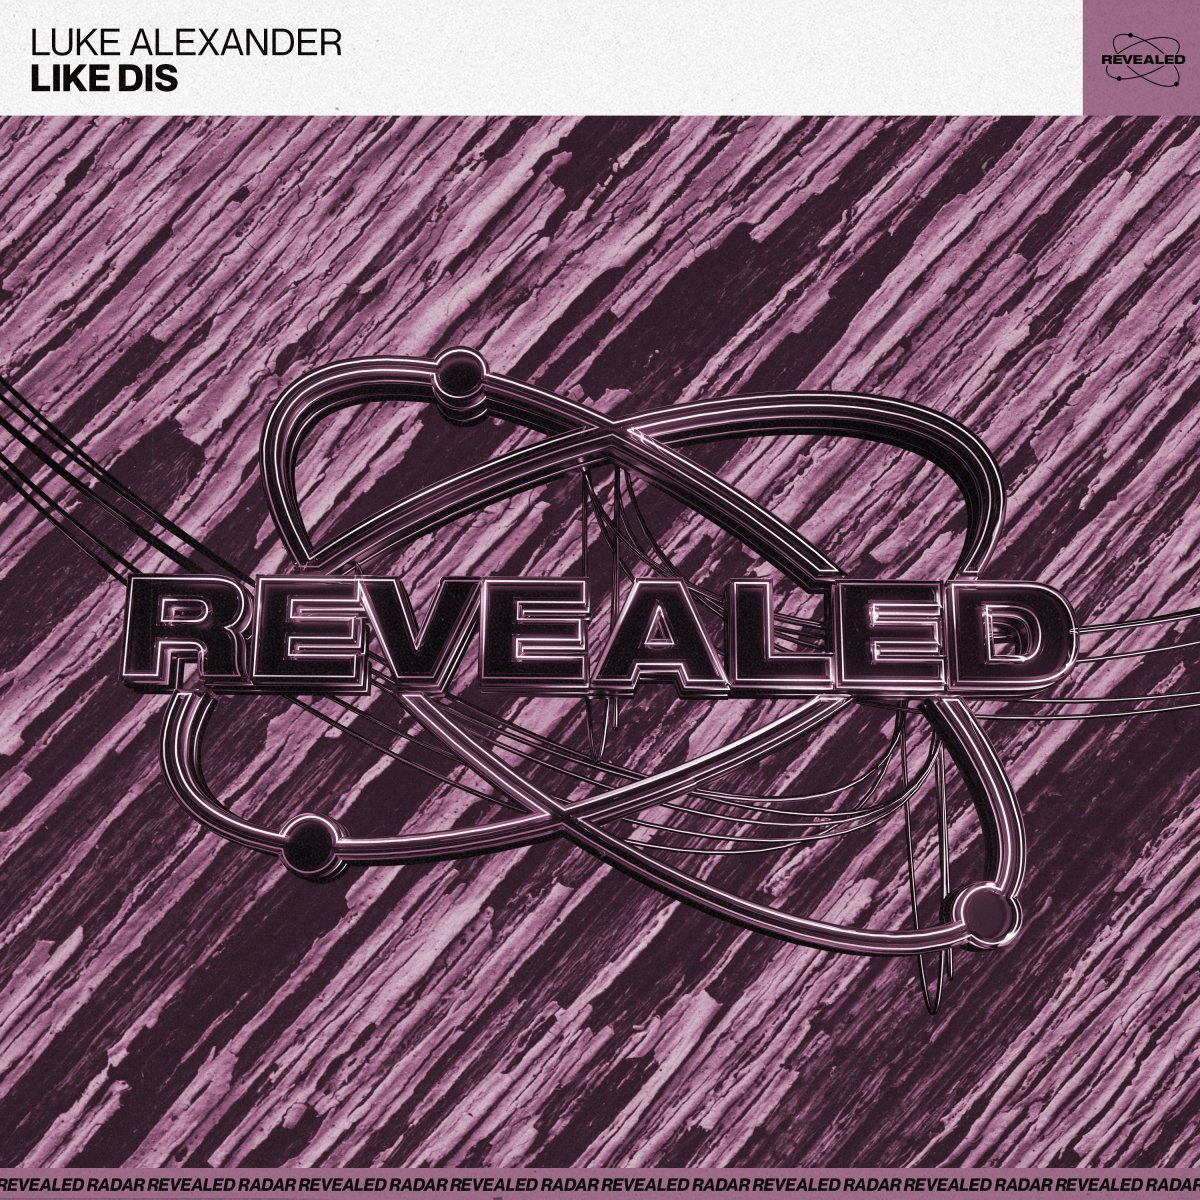 Like Dis - Luke Alexander⁠ 